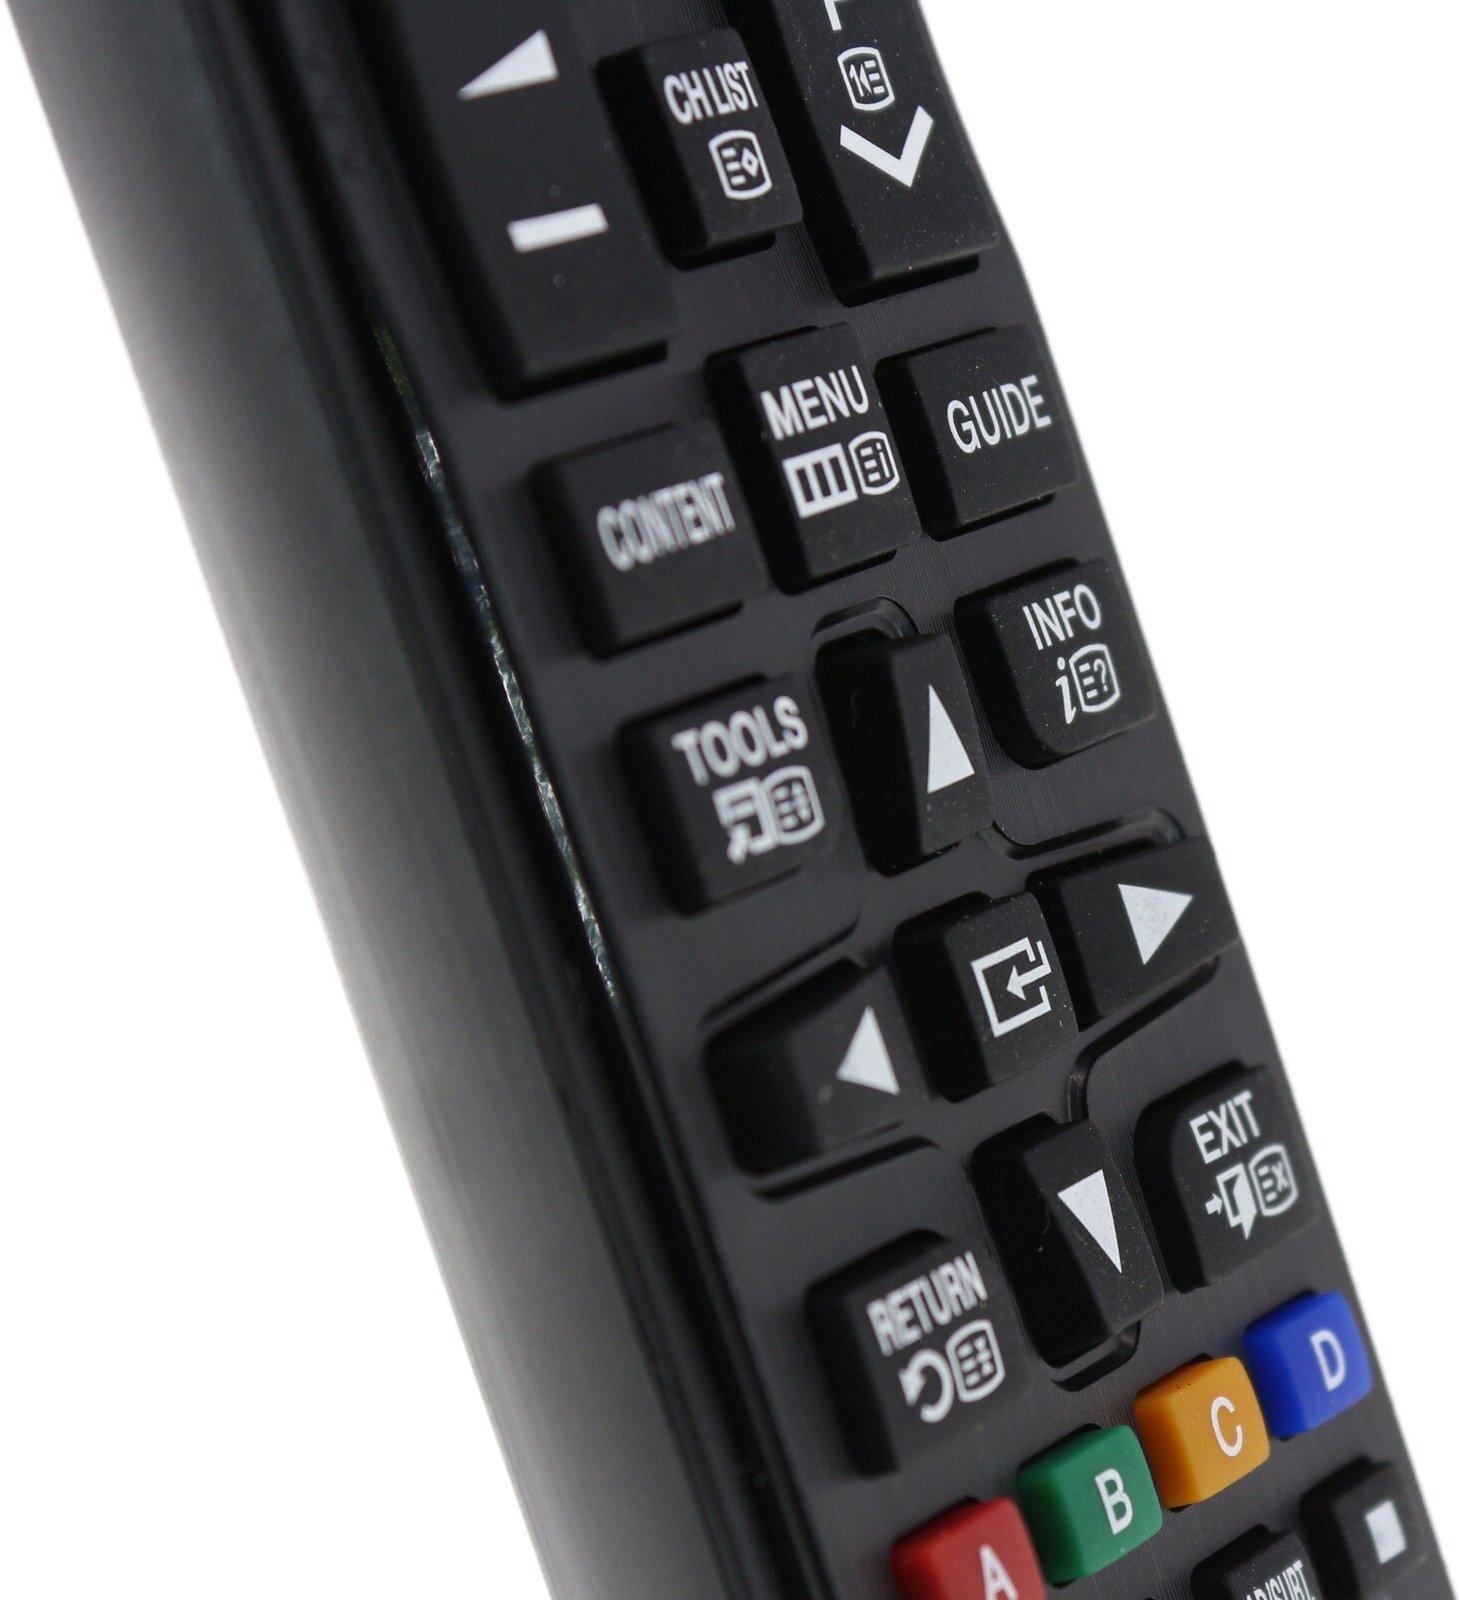 Пульт ДУ Huayu AA59-00602A для телевизоров Samsung LE-32E420M2W/LE-32E420E2W/PS43E452A4W, черный